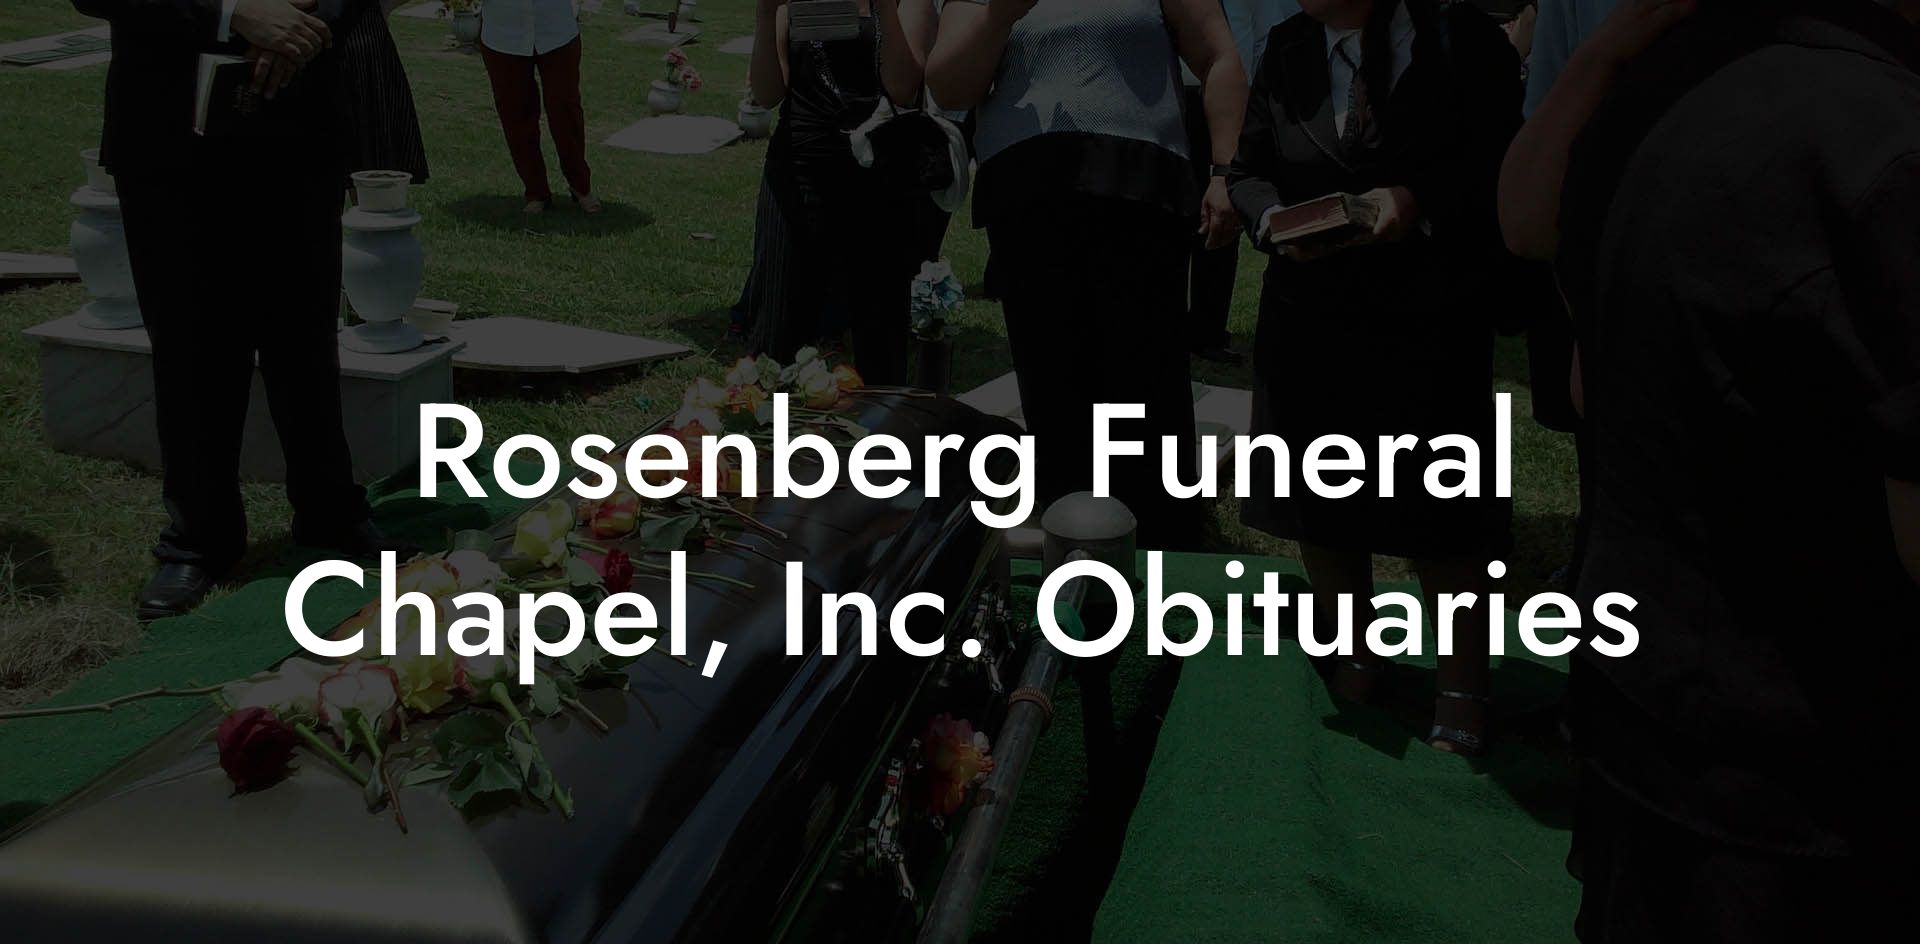 Rosenberg Funeral Chapel, Inc. Obituaries